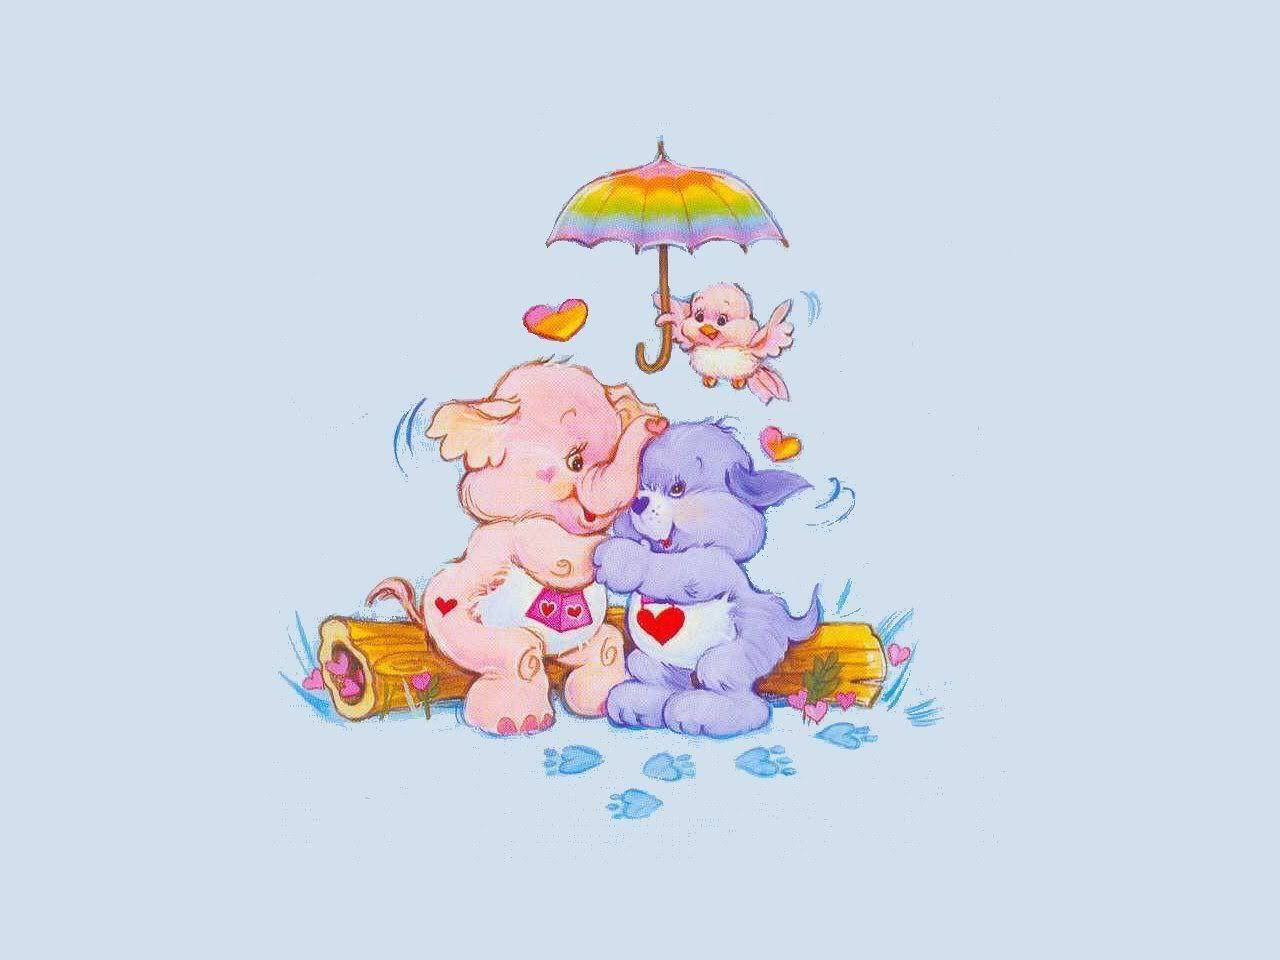 Care Bears Under The Umbrella